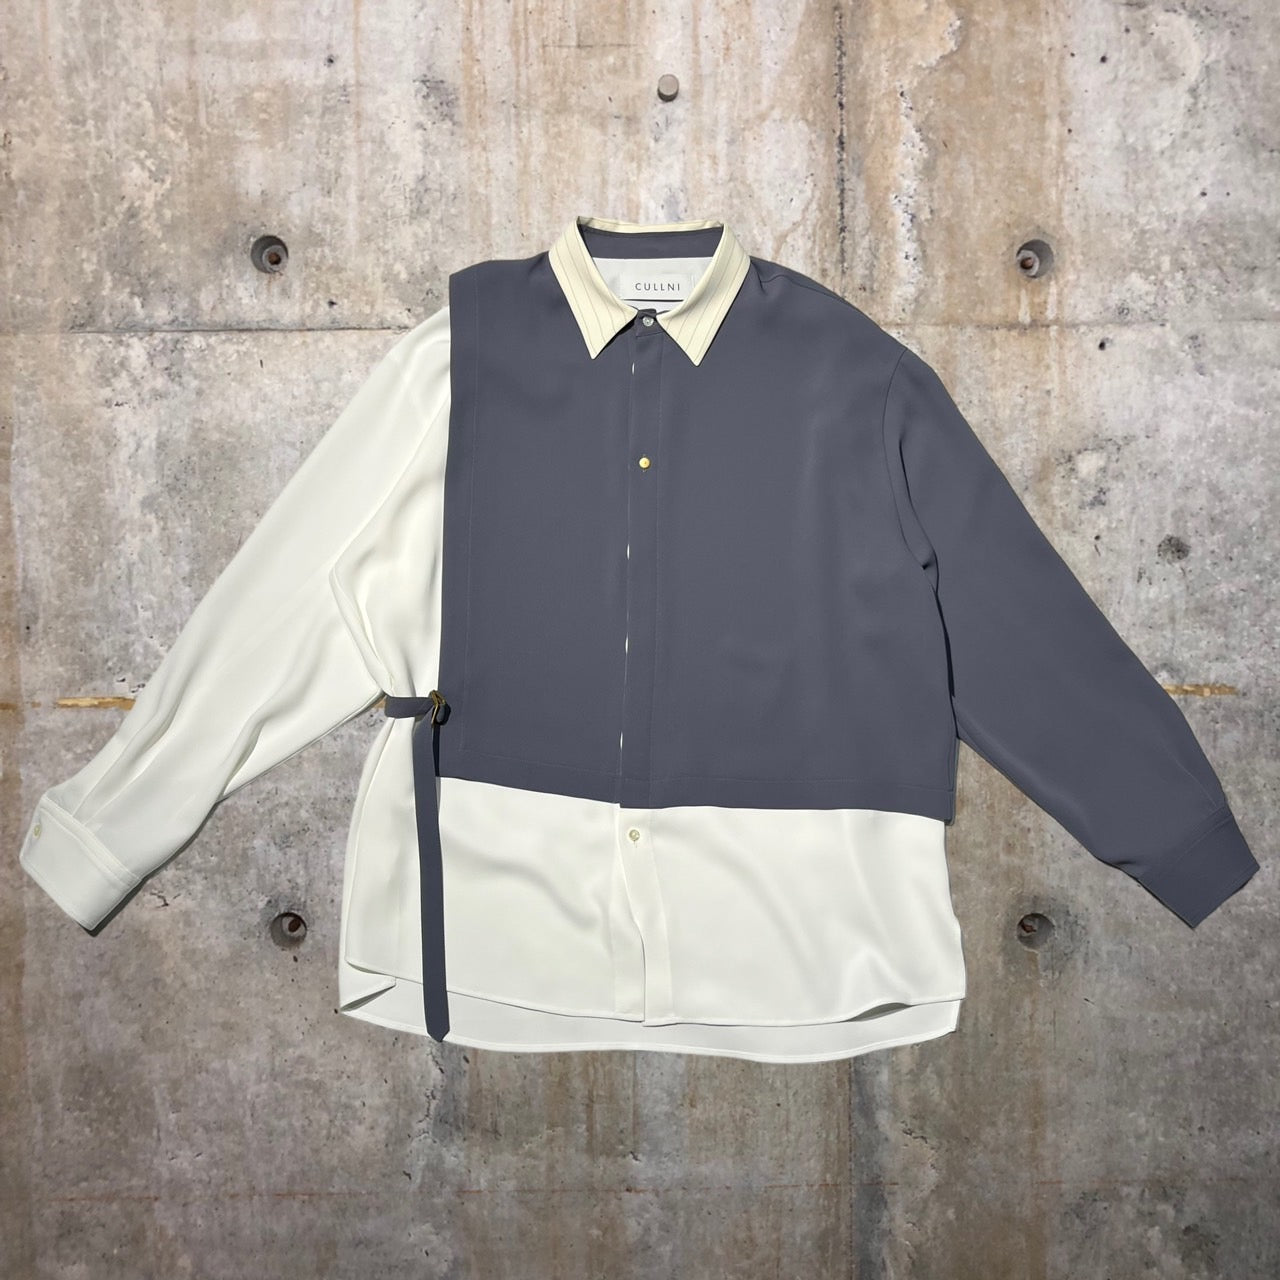 CULLNI(クルニ) 22SSコンビネーションシャツ/ドッキングシャツ 22-SS-005 2(Mサイズ程度) グレー×ホワイト